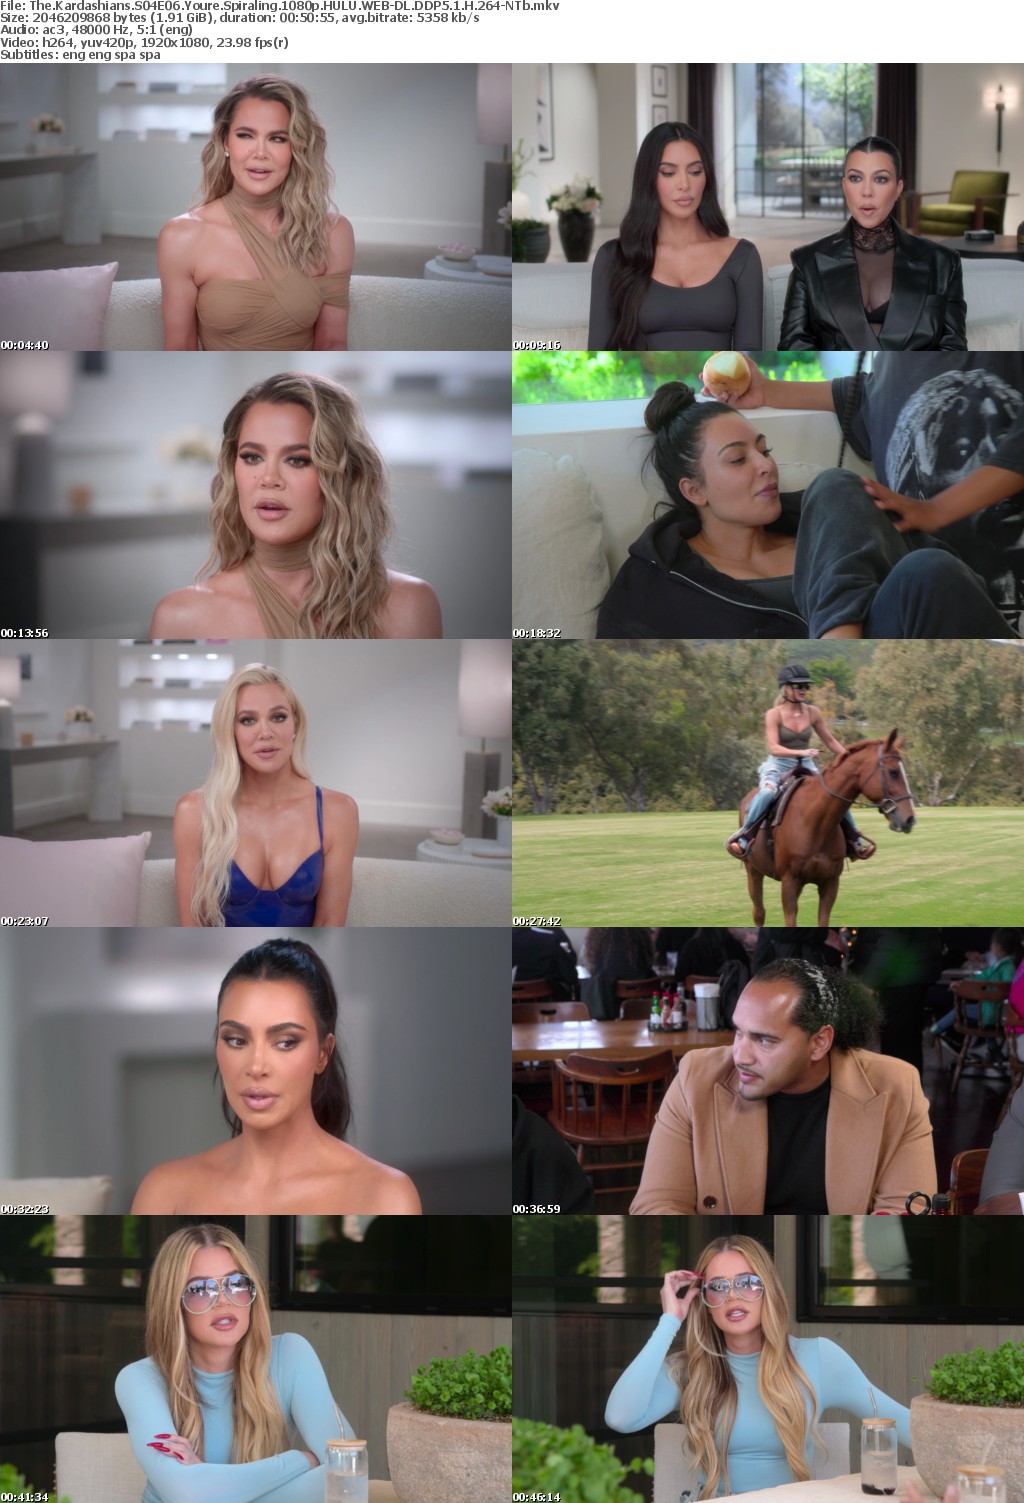 The Kardashians S04E06 Youre Spiraling 1080p HULU WEB-DL DDP5 1 H 264-NTb